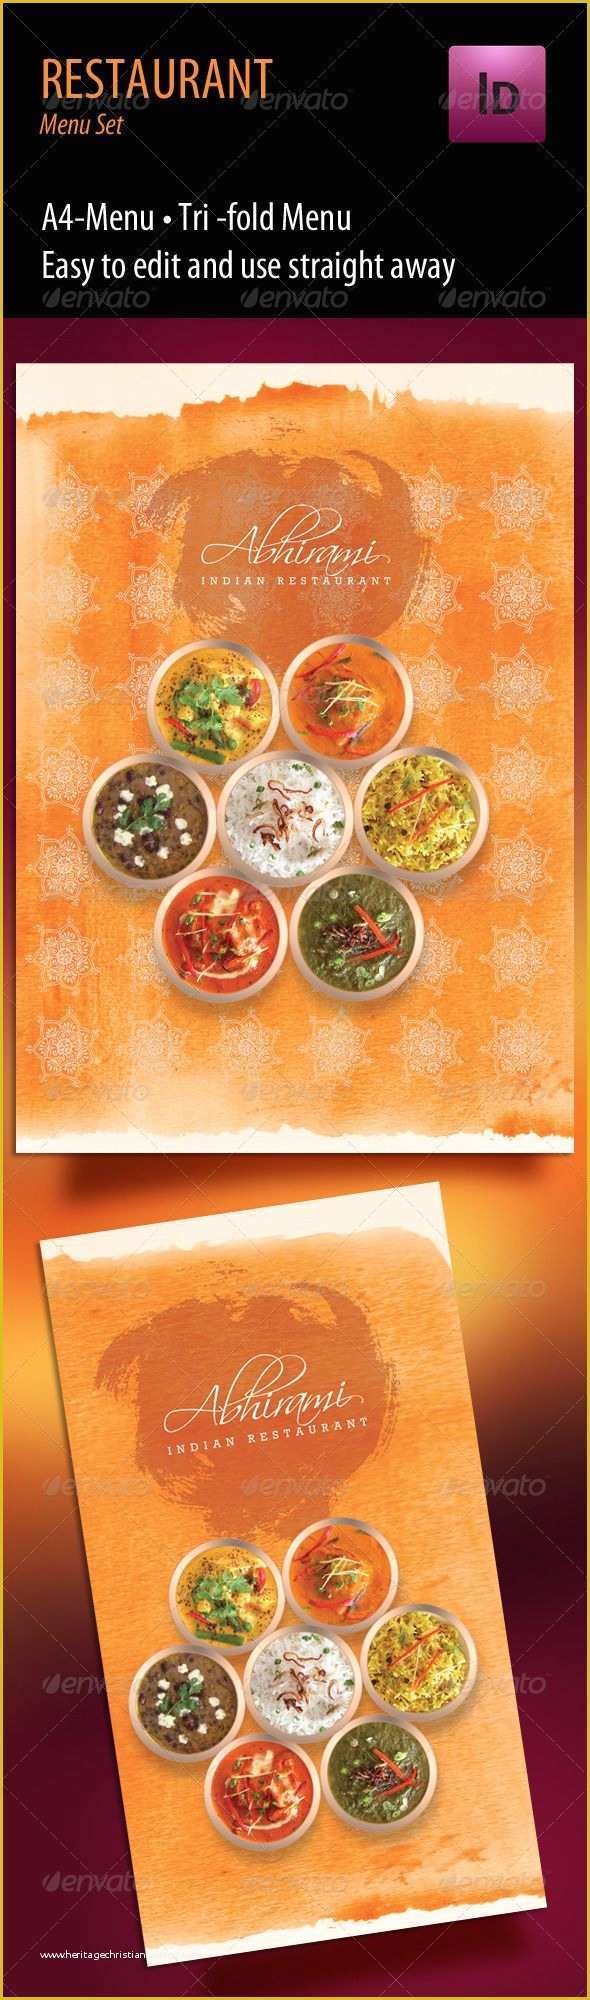 Indian Menu Template Free Of Indian Restaurant Menu Set A4 & Trifold